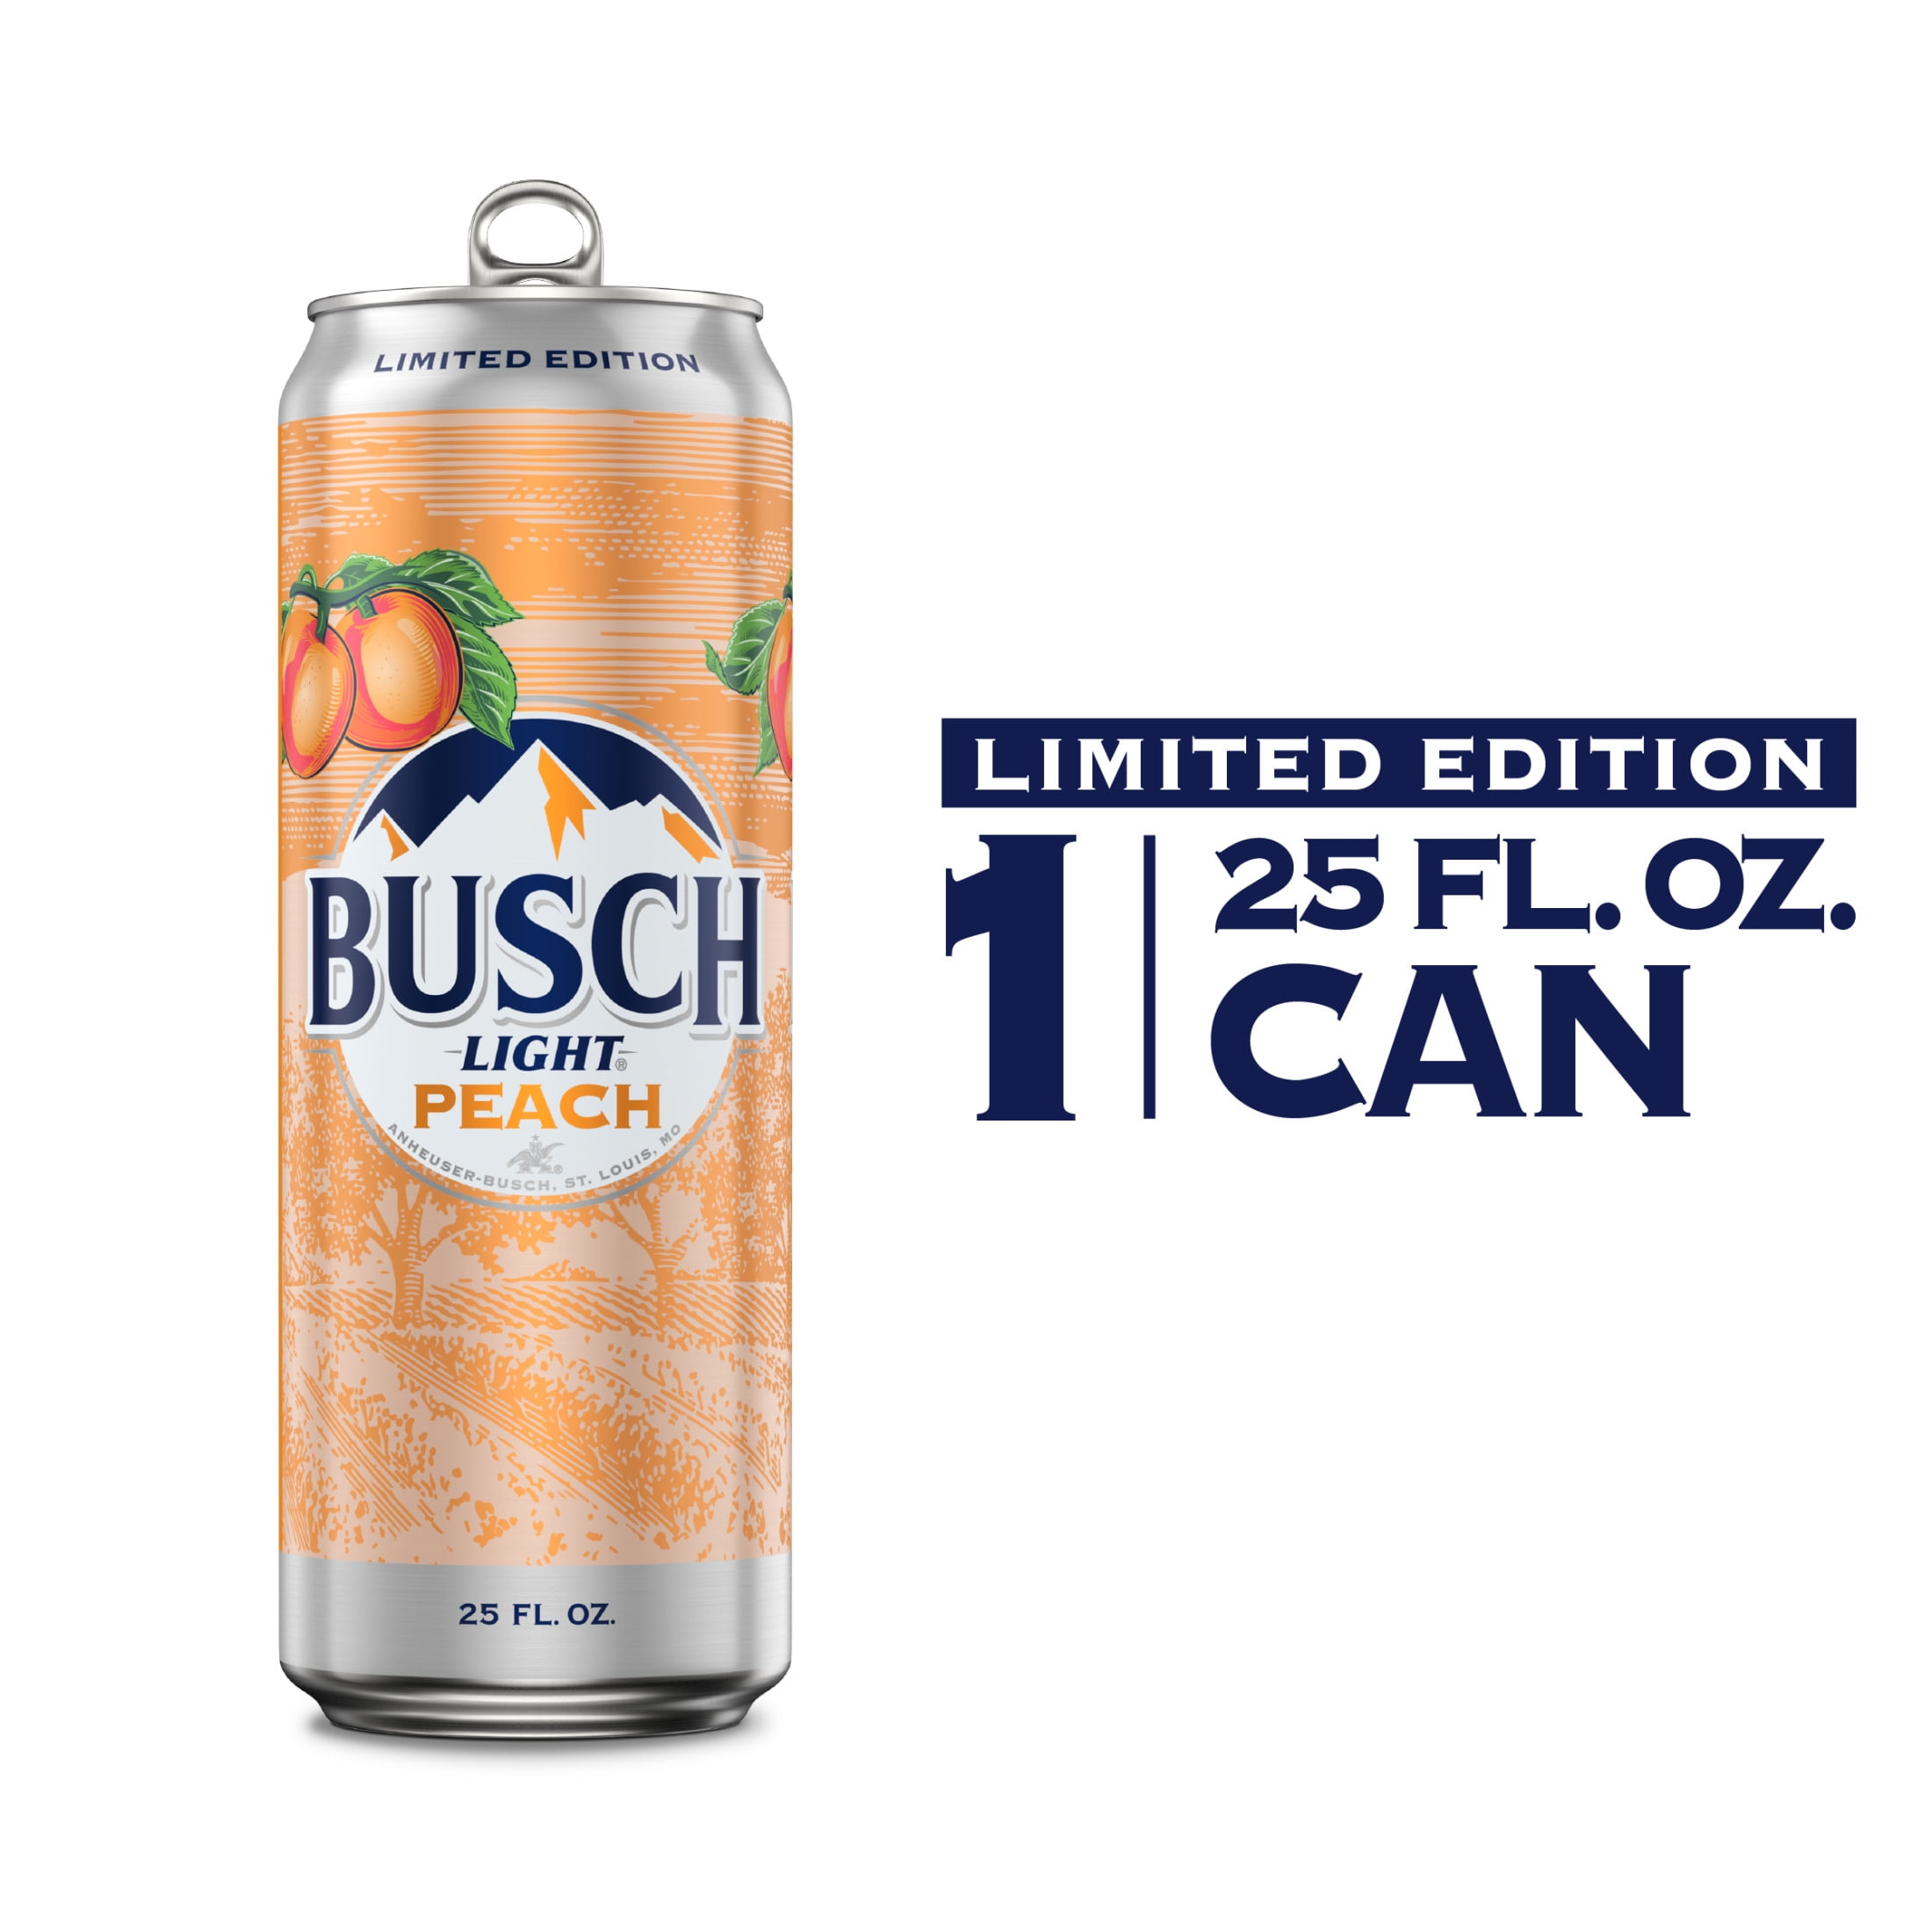 Busch Light Peach Domestic Beer 25 fl oz 1 Aluminum Can 4.1% ABV 